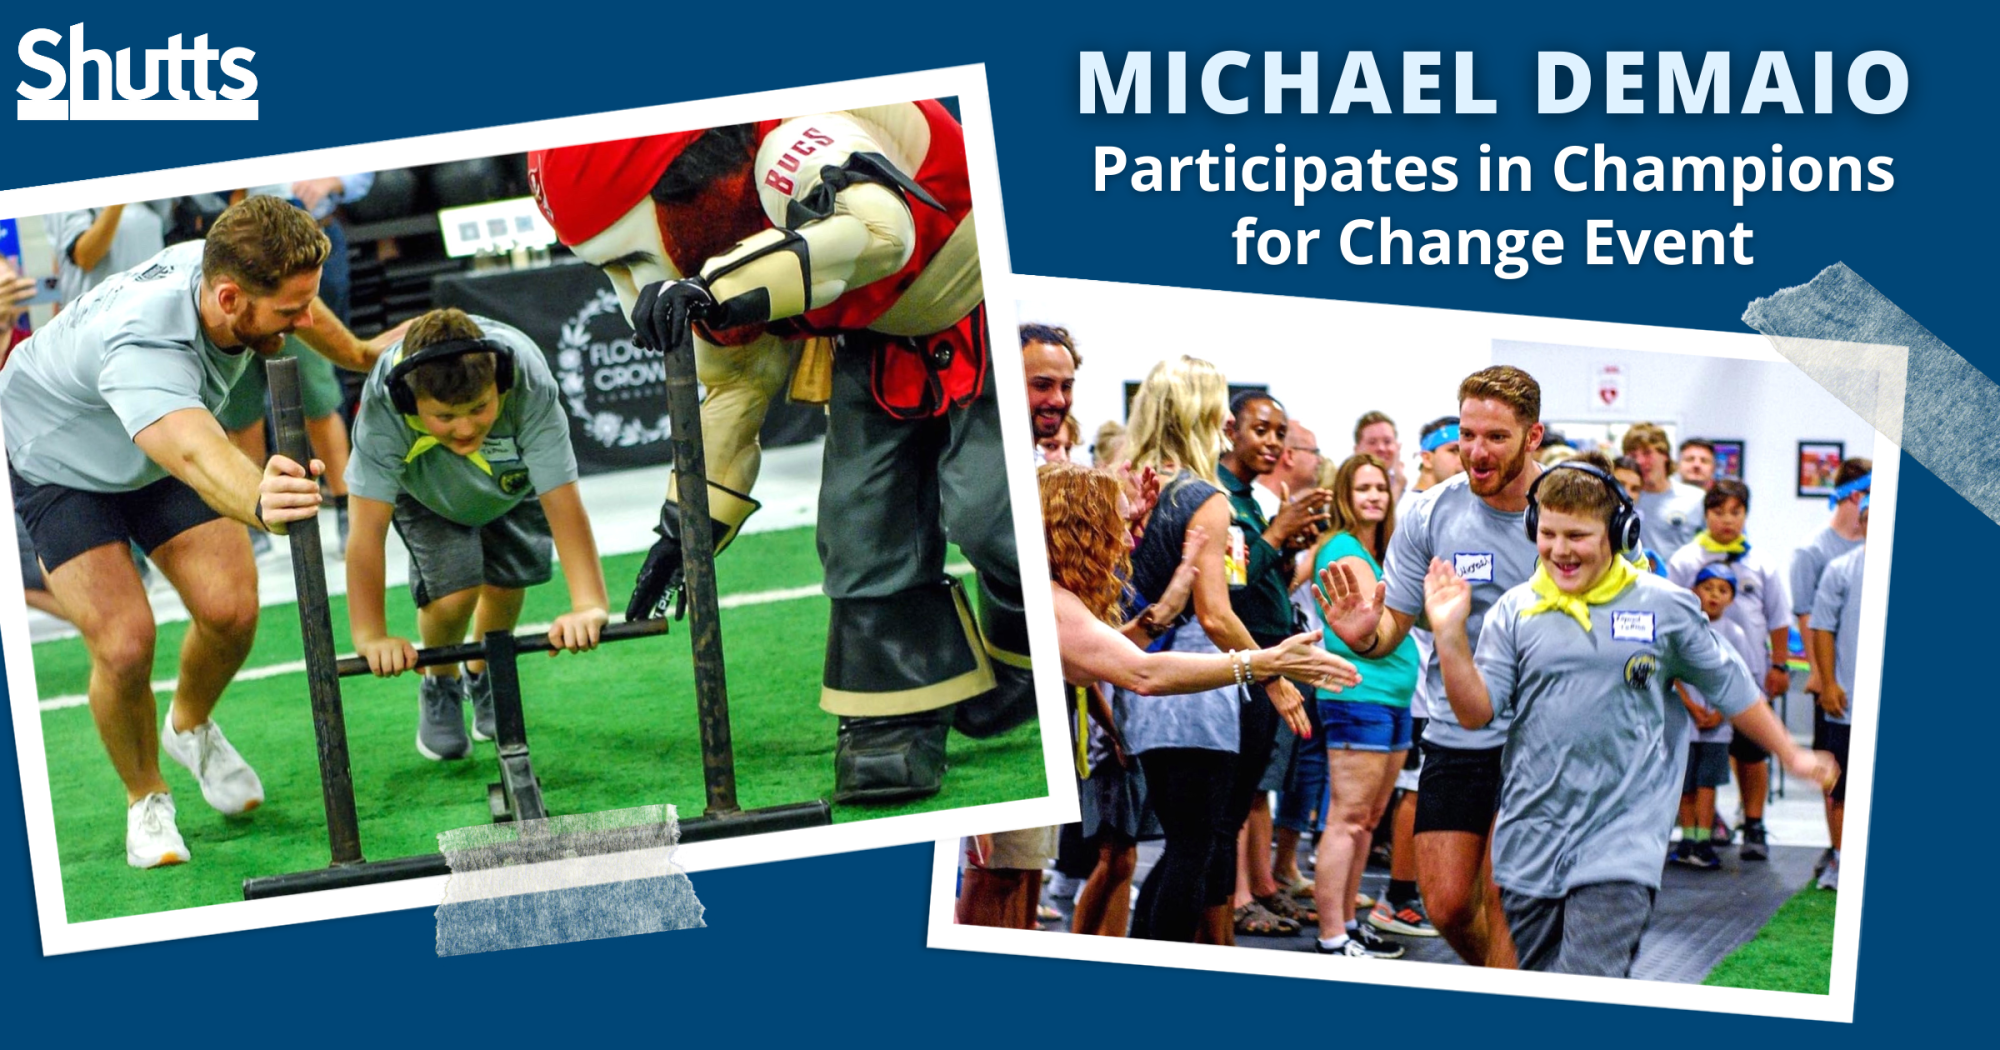 Michael DeMaio Participates in Tampa Champions for Change Event